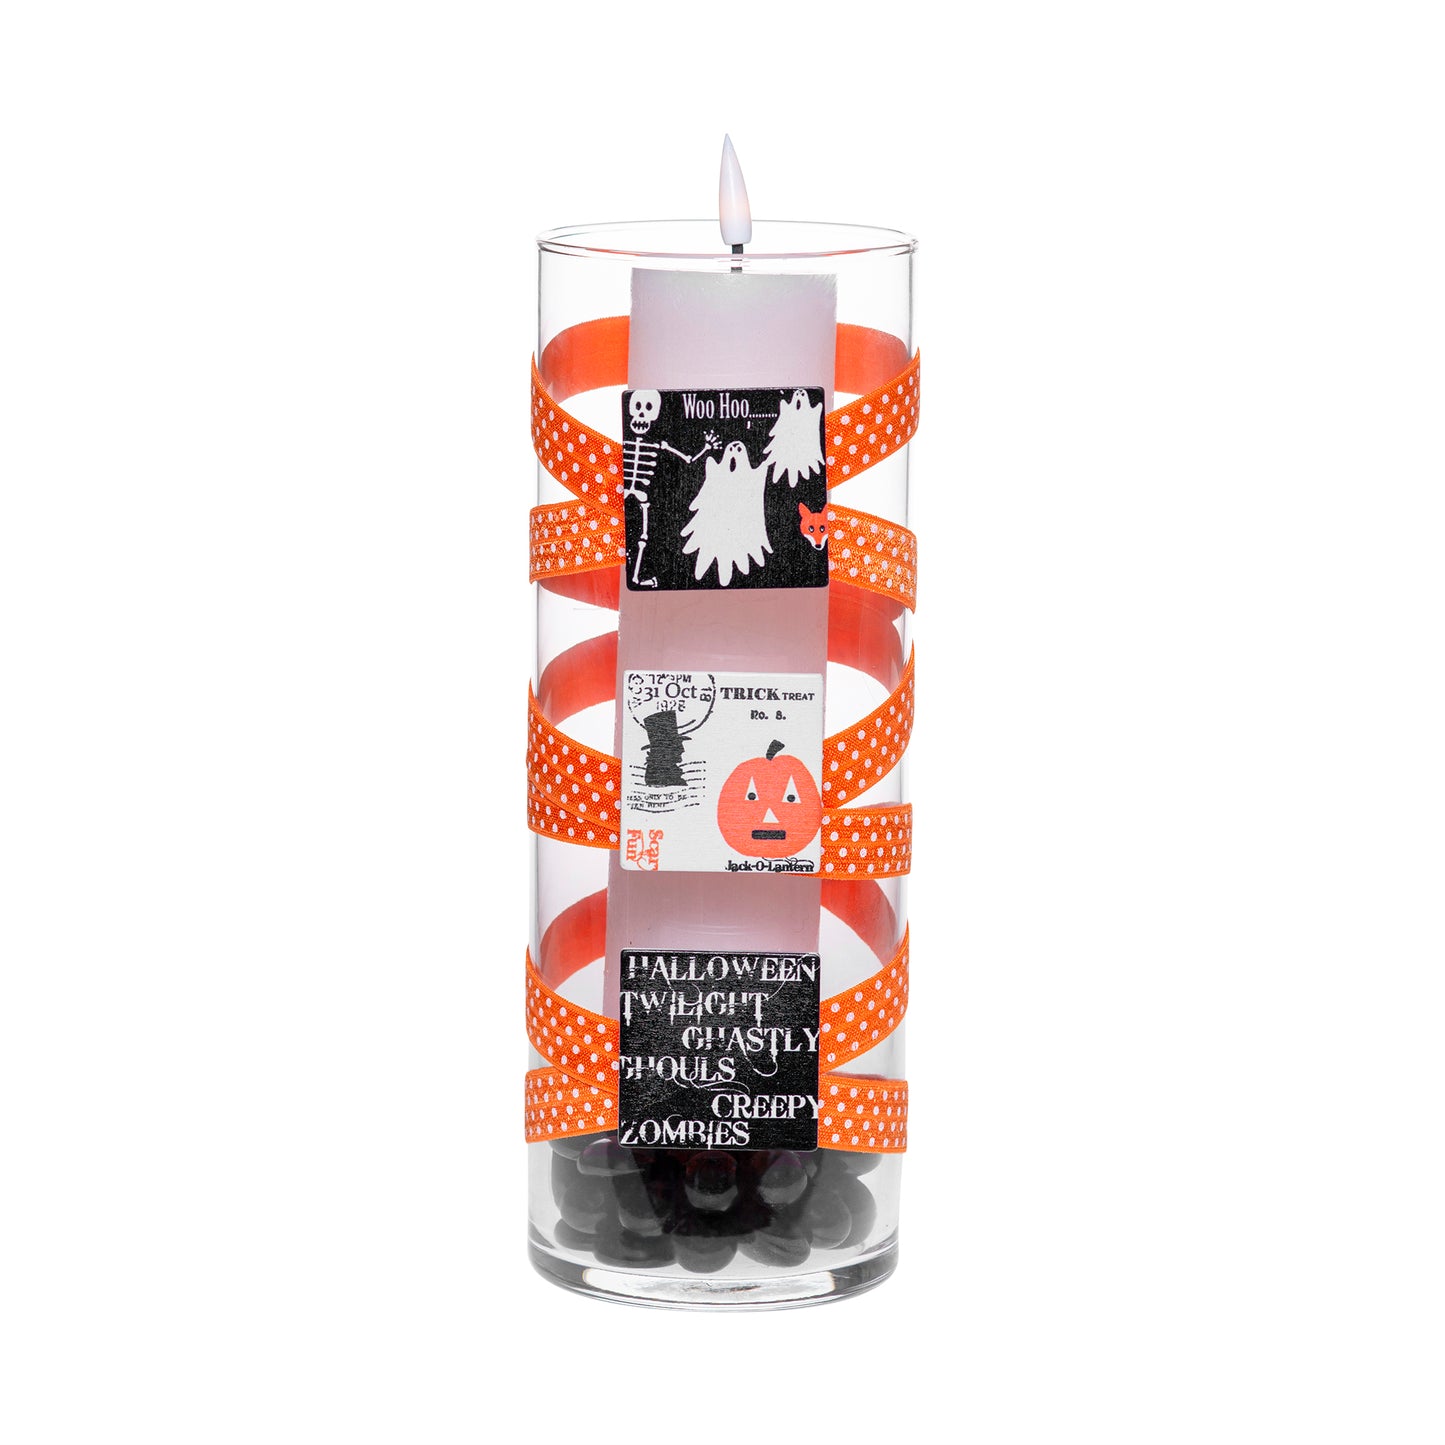 3.5" x 9.5" Vase Orange White Polka Dot 5X 6 Retro Halloween Clips 1 Fall-O-Ween Collection Complete Set